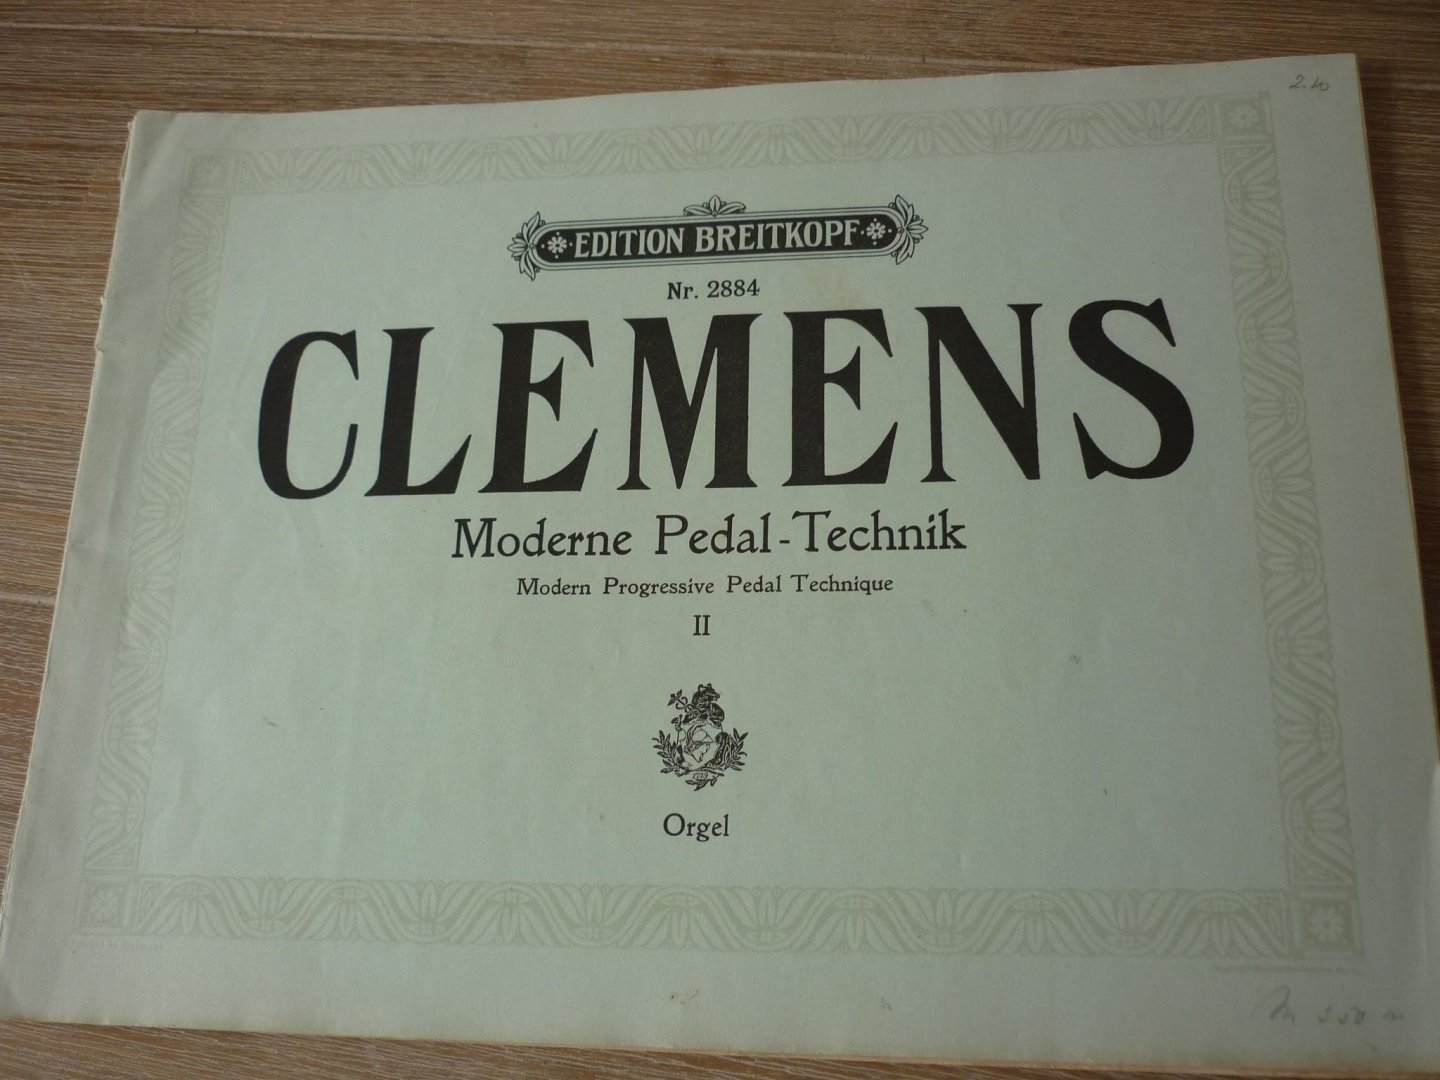 Clemens; Charles E. - Moderne Pedal-Technik - Deel II; in stufenweise fortschreitender Ordnung